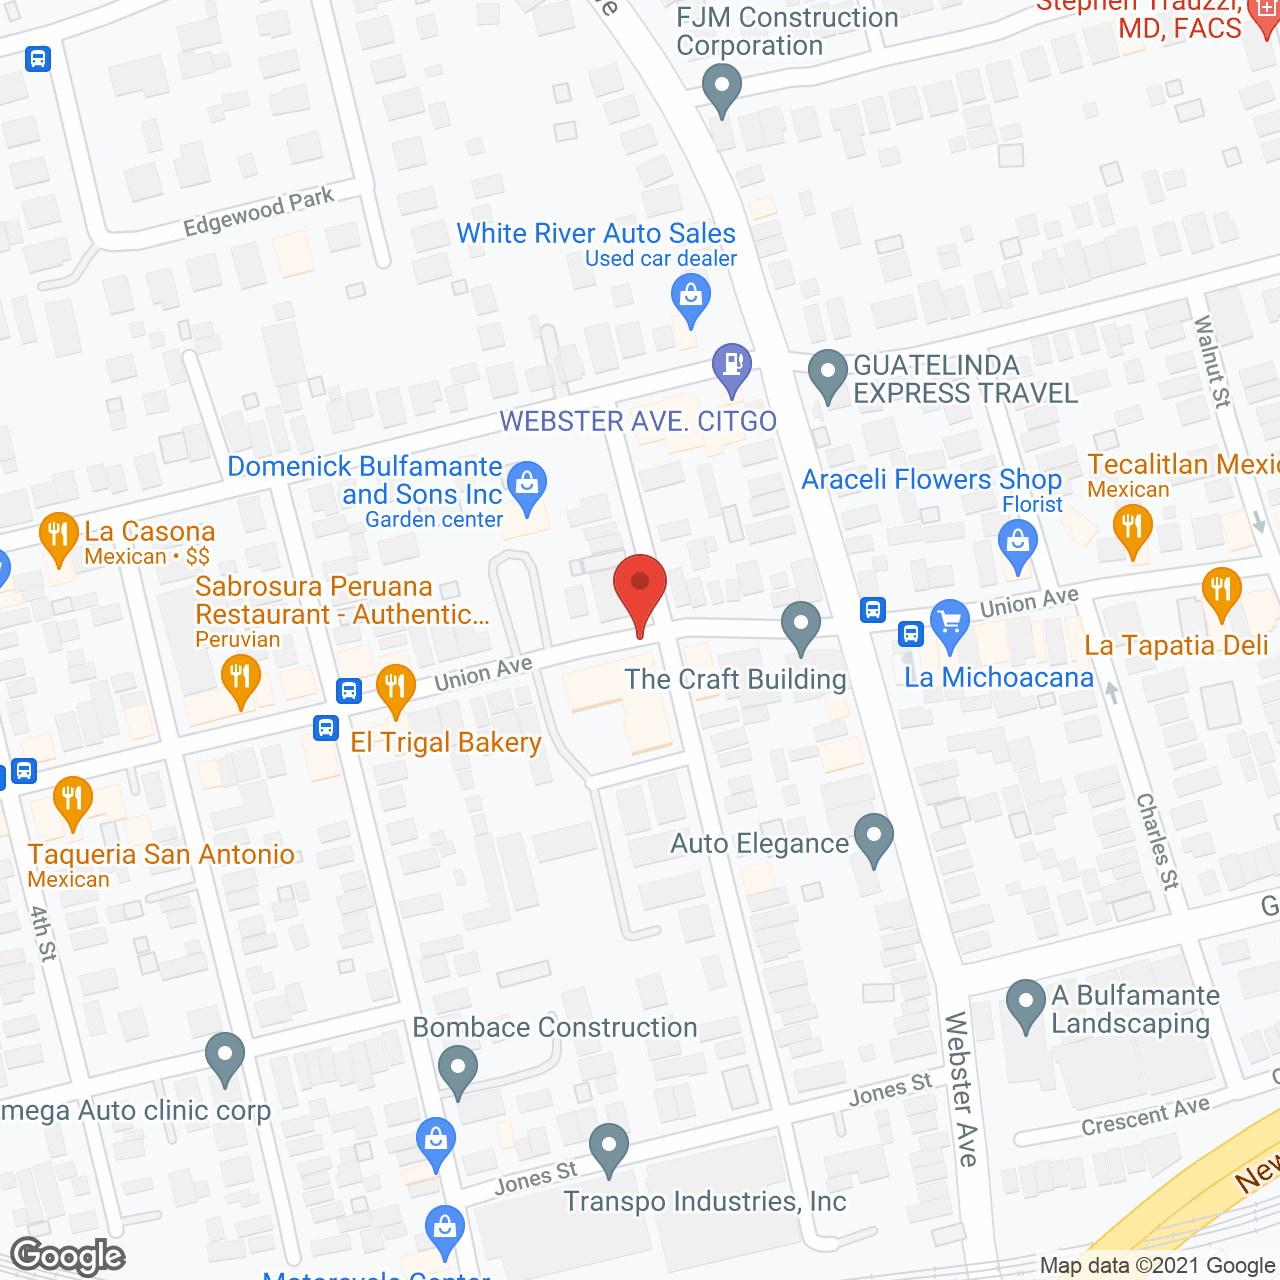 Garito Manor Senior Residence in google map